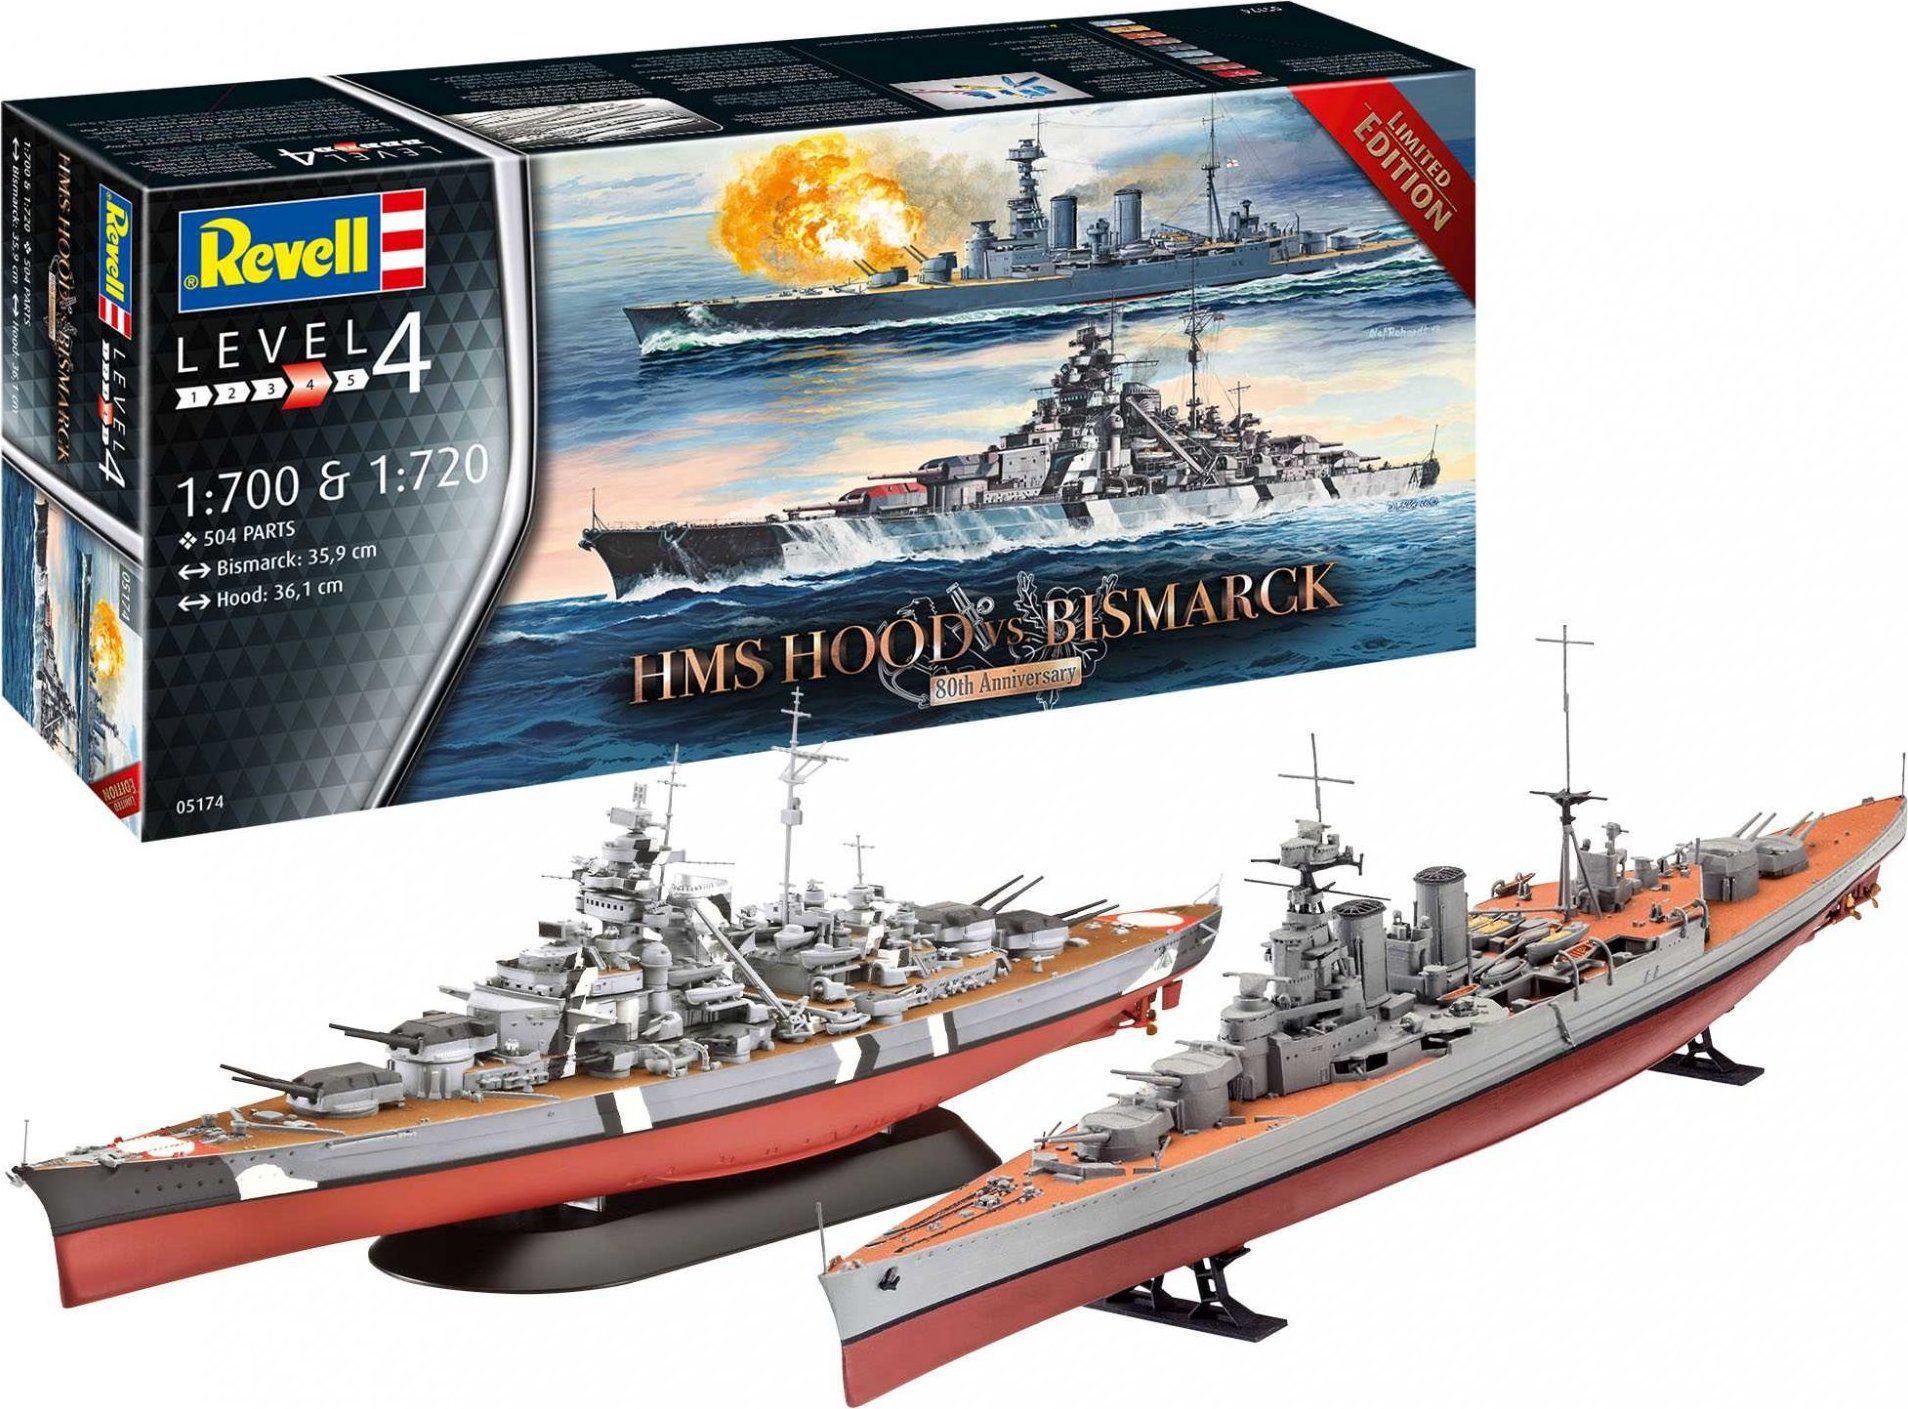 REVELL Plastic ModelKit lodě Limited Edition 05174 - Battle Set HMS HOOD vs. BISMARCK - 80th Anniversary (1:700) - obrázek 1